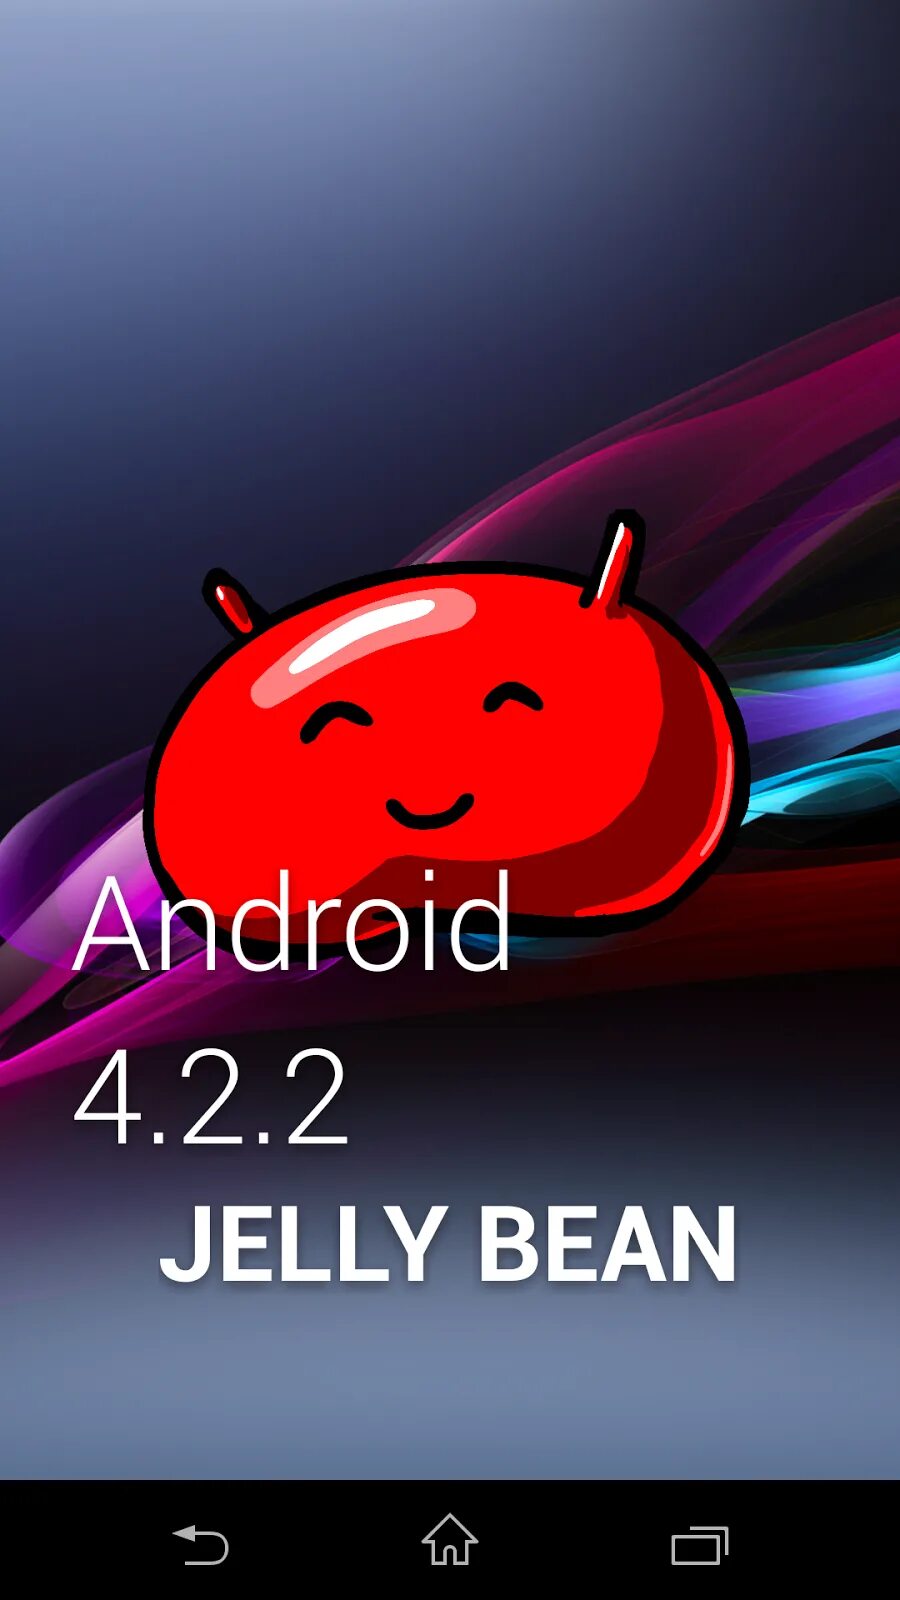 Jelly android. Андроид Джелли Бин. Андроид Jelly Bean. Android 4.1.2 Jelly Bean. Android 4.2 Jelly Bean.